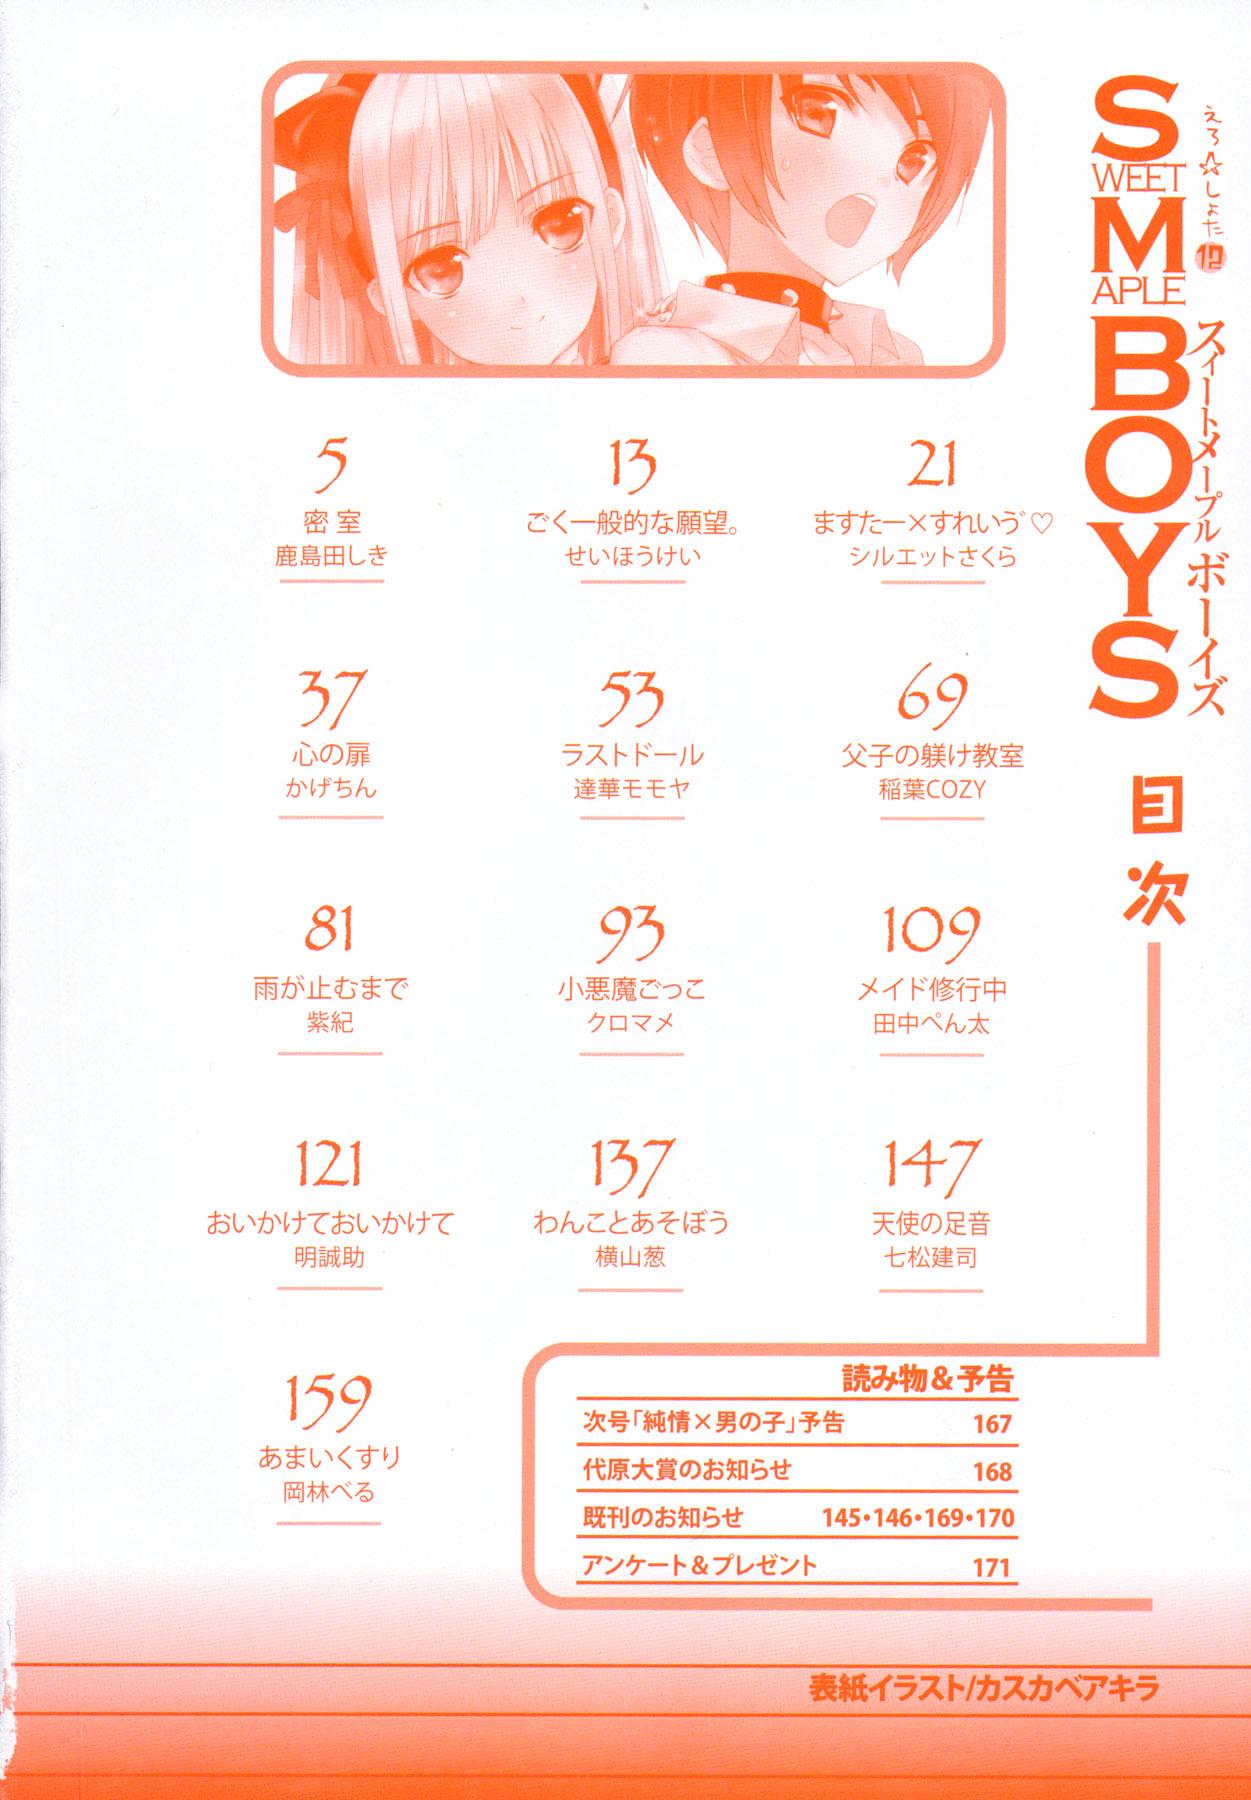 Uncensored Ero Shota 12 - Sweet Maple Boys Bisex - Page 3